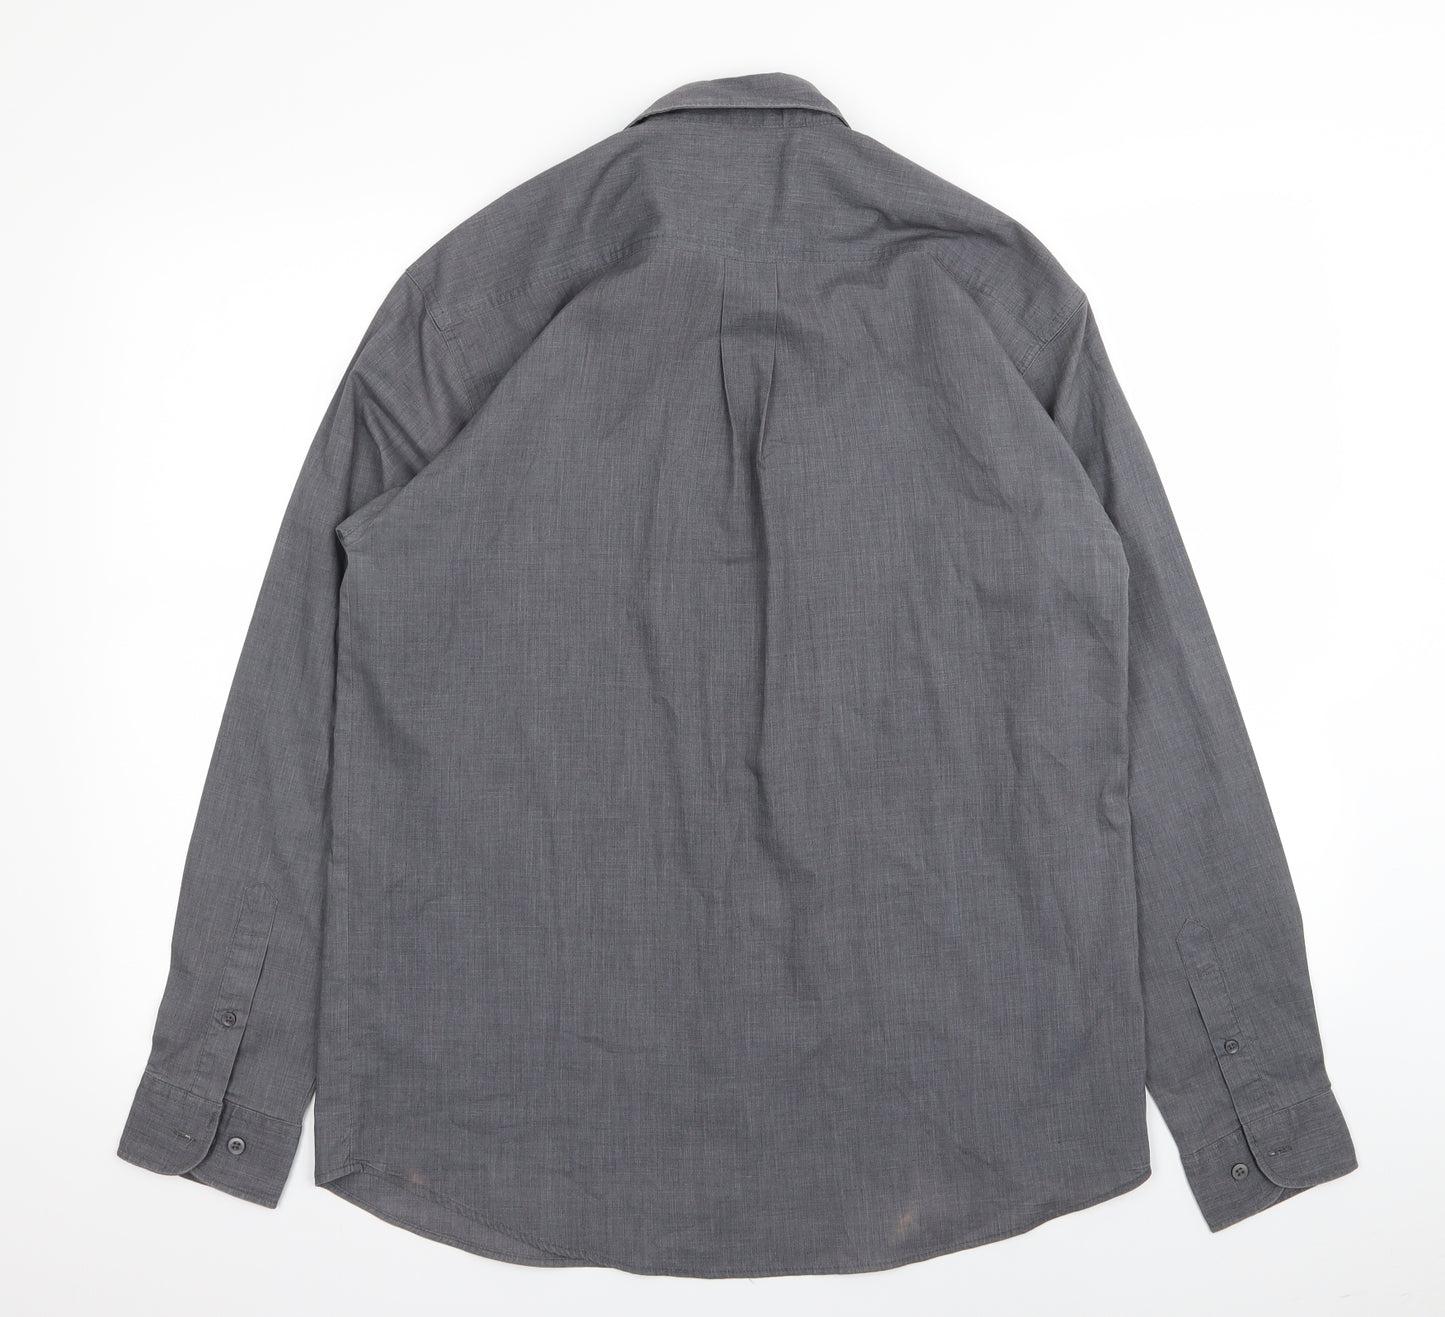 ted taylor Mens Grey    Dress Shirt Size 16